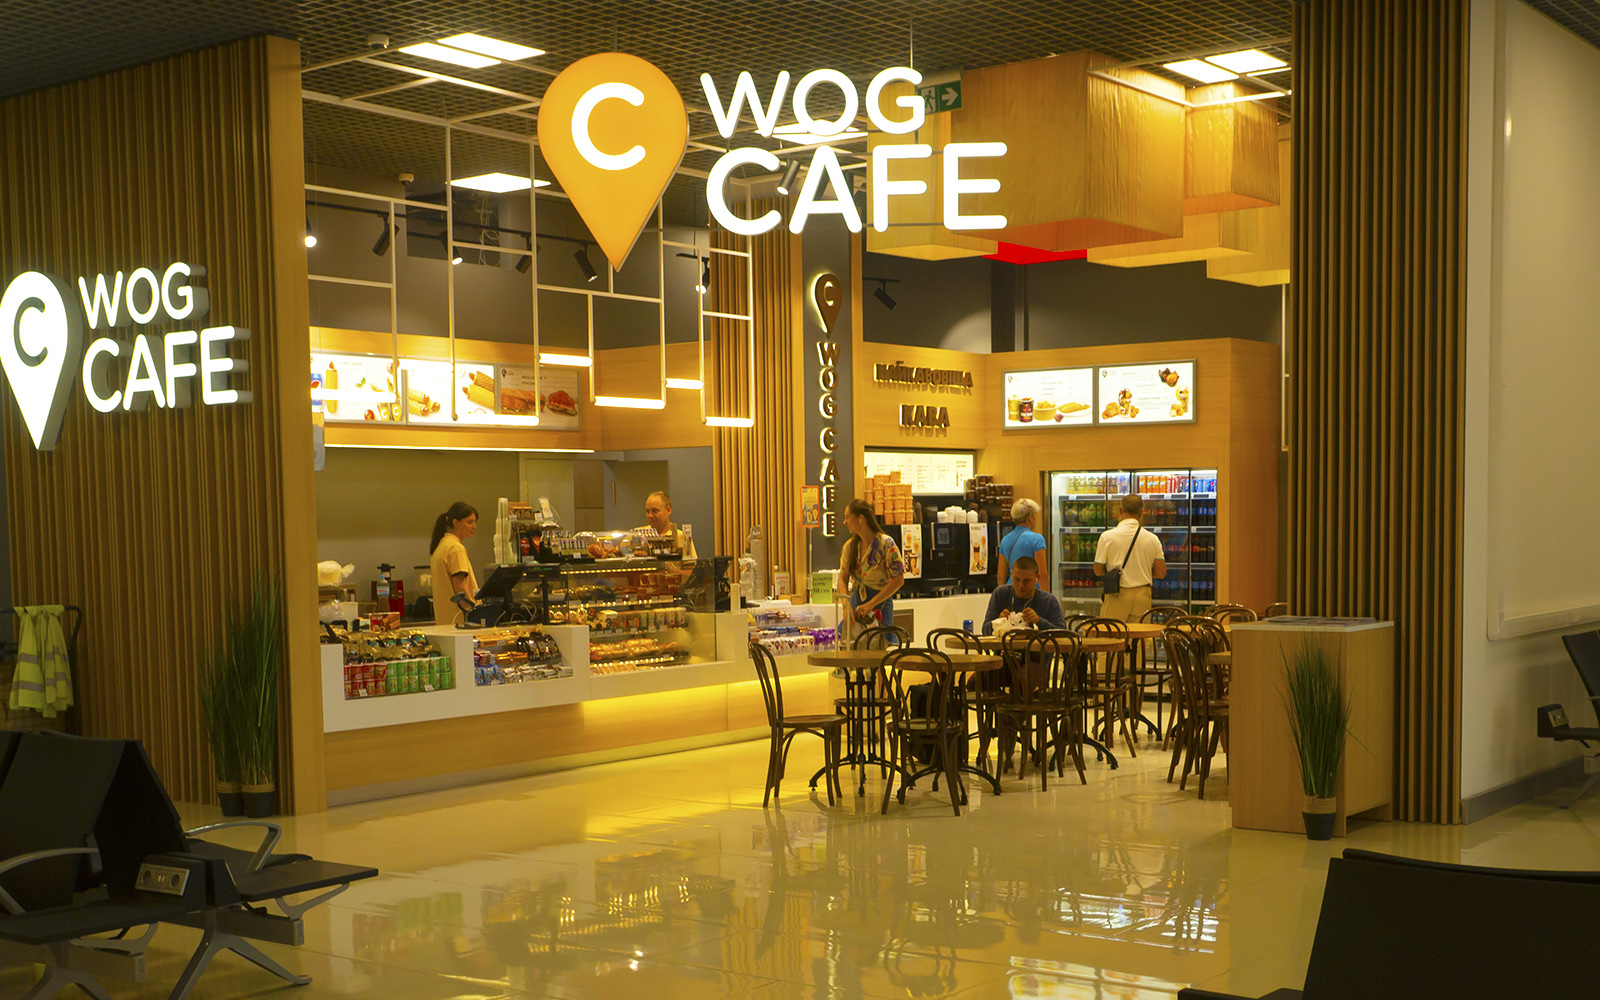 Wog cafe